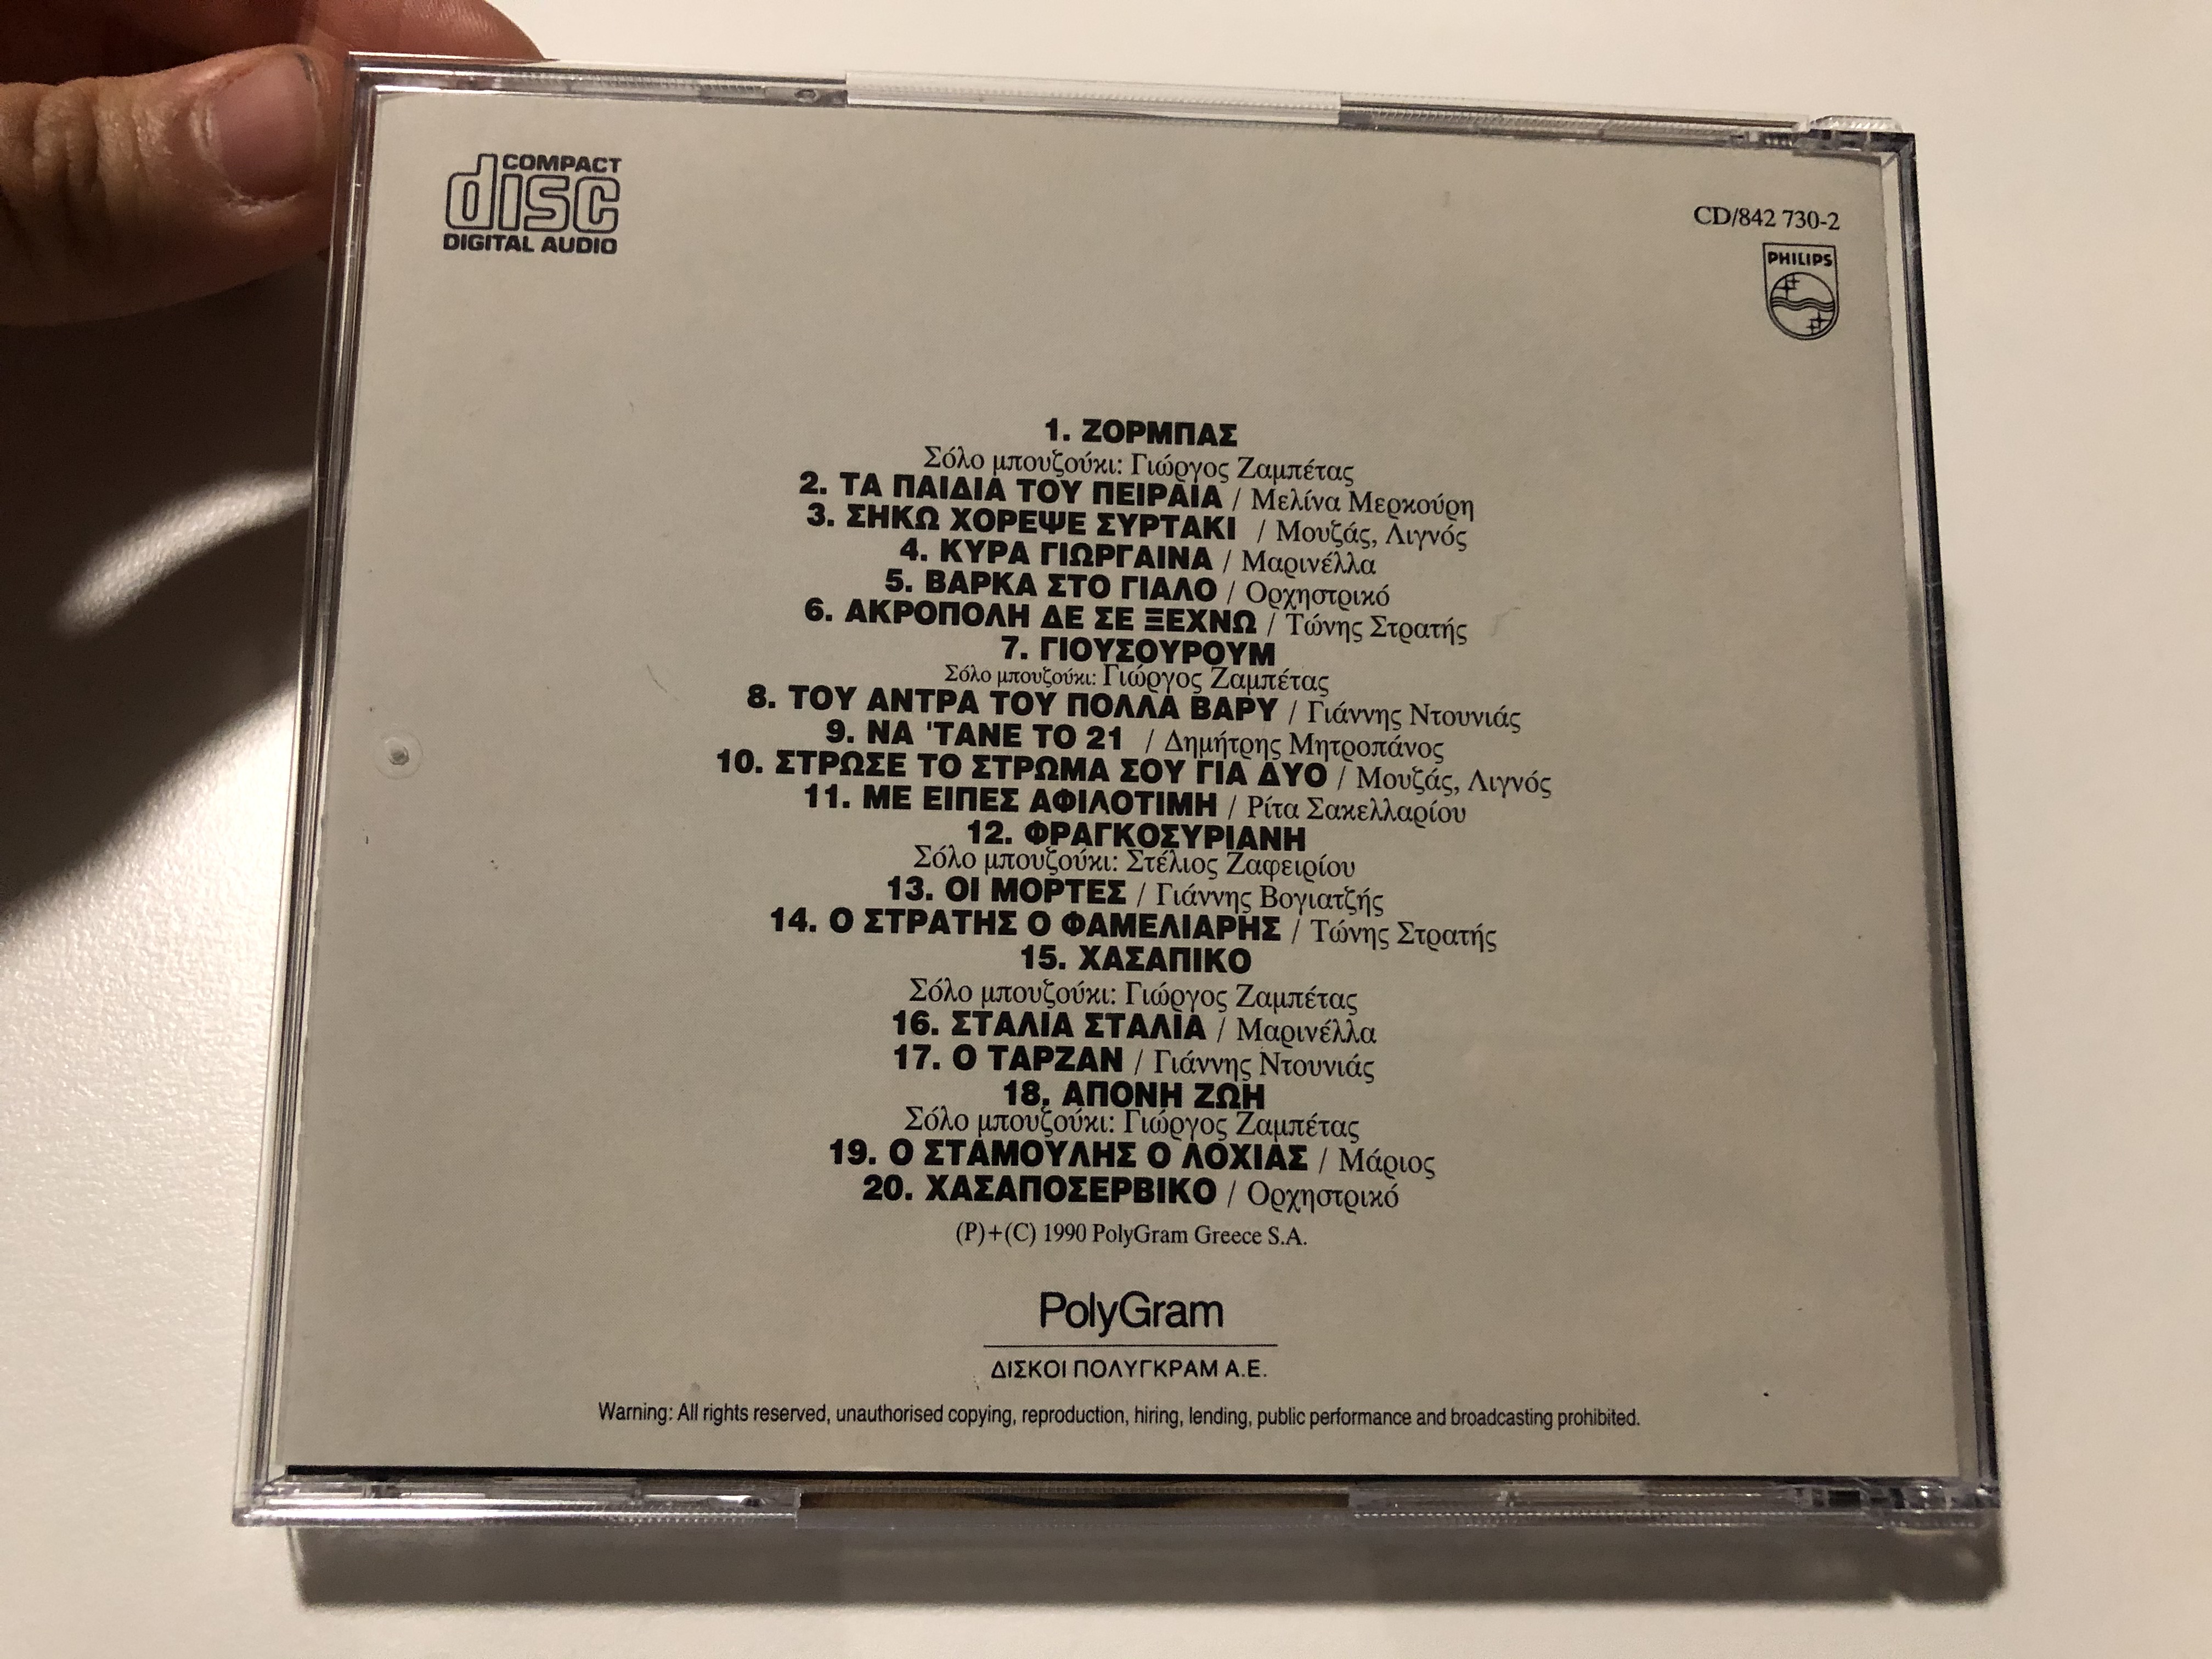 20-original-sirtaki-philips-audio-cd-1990-842-730-2-8-.jpg